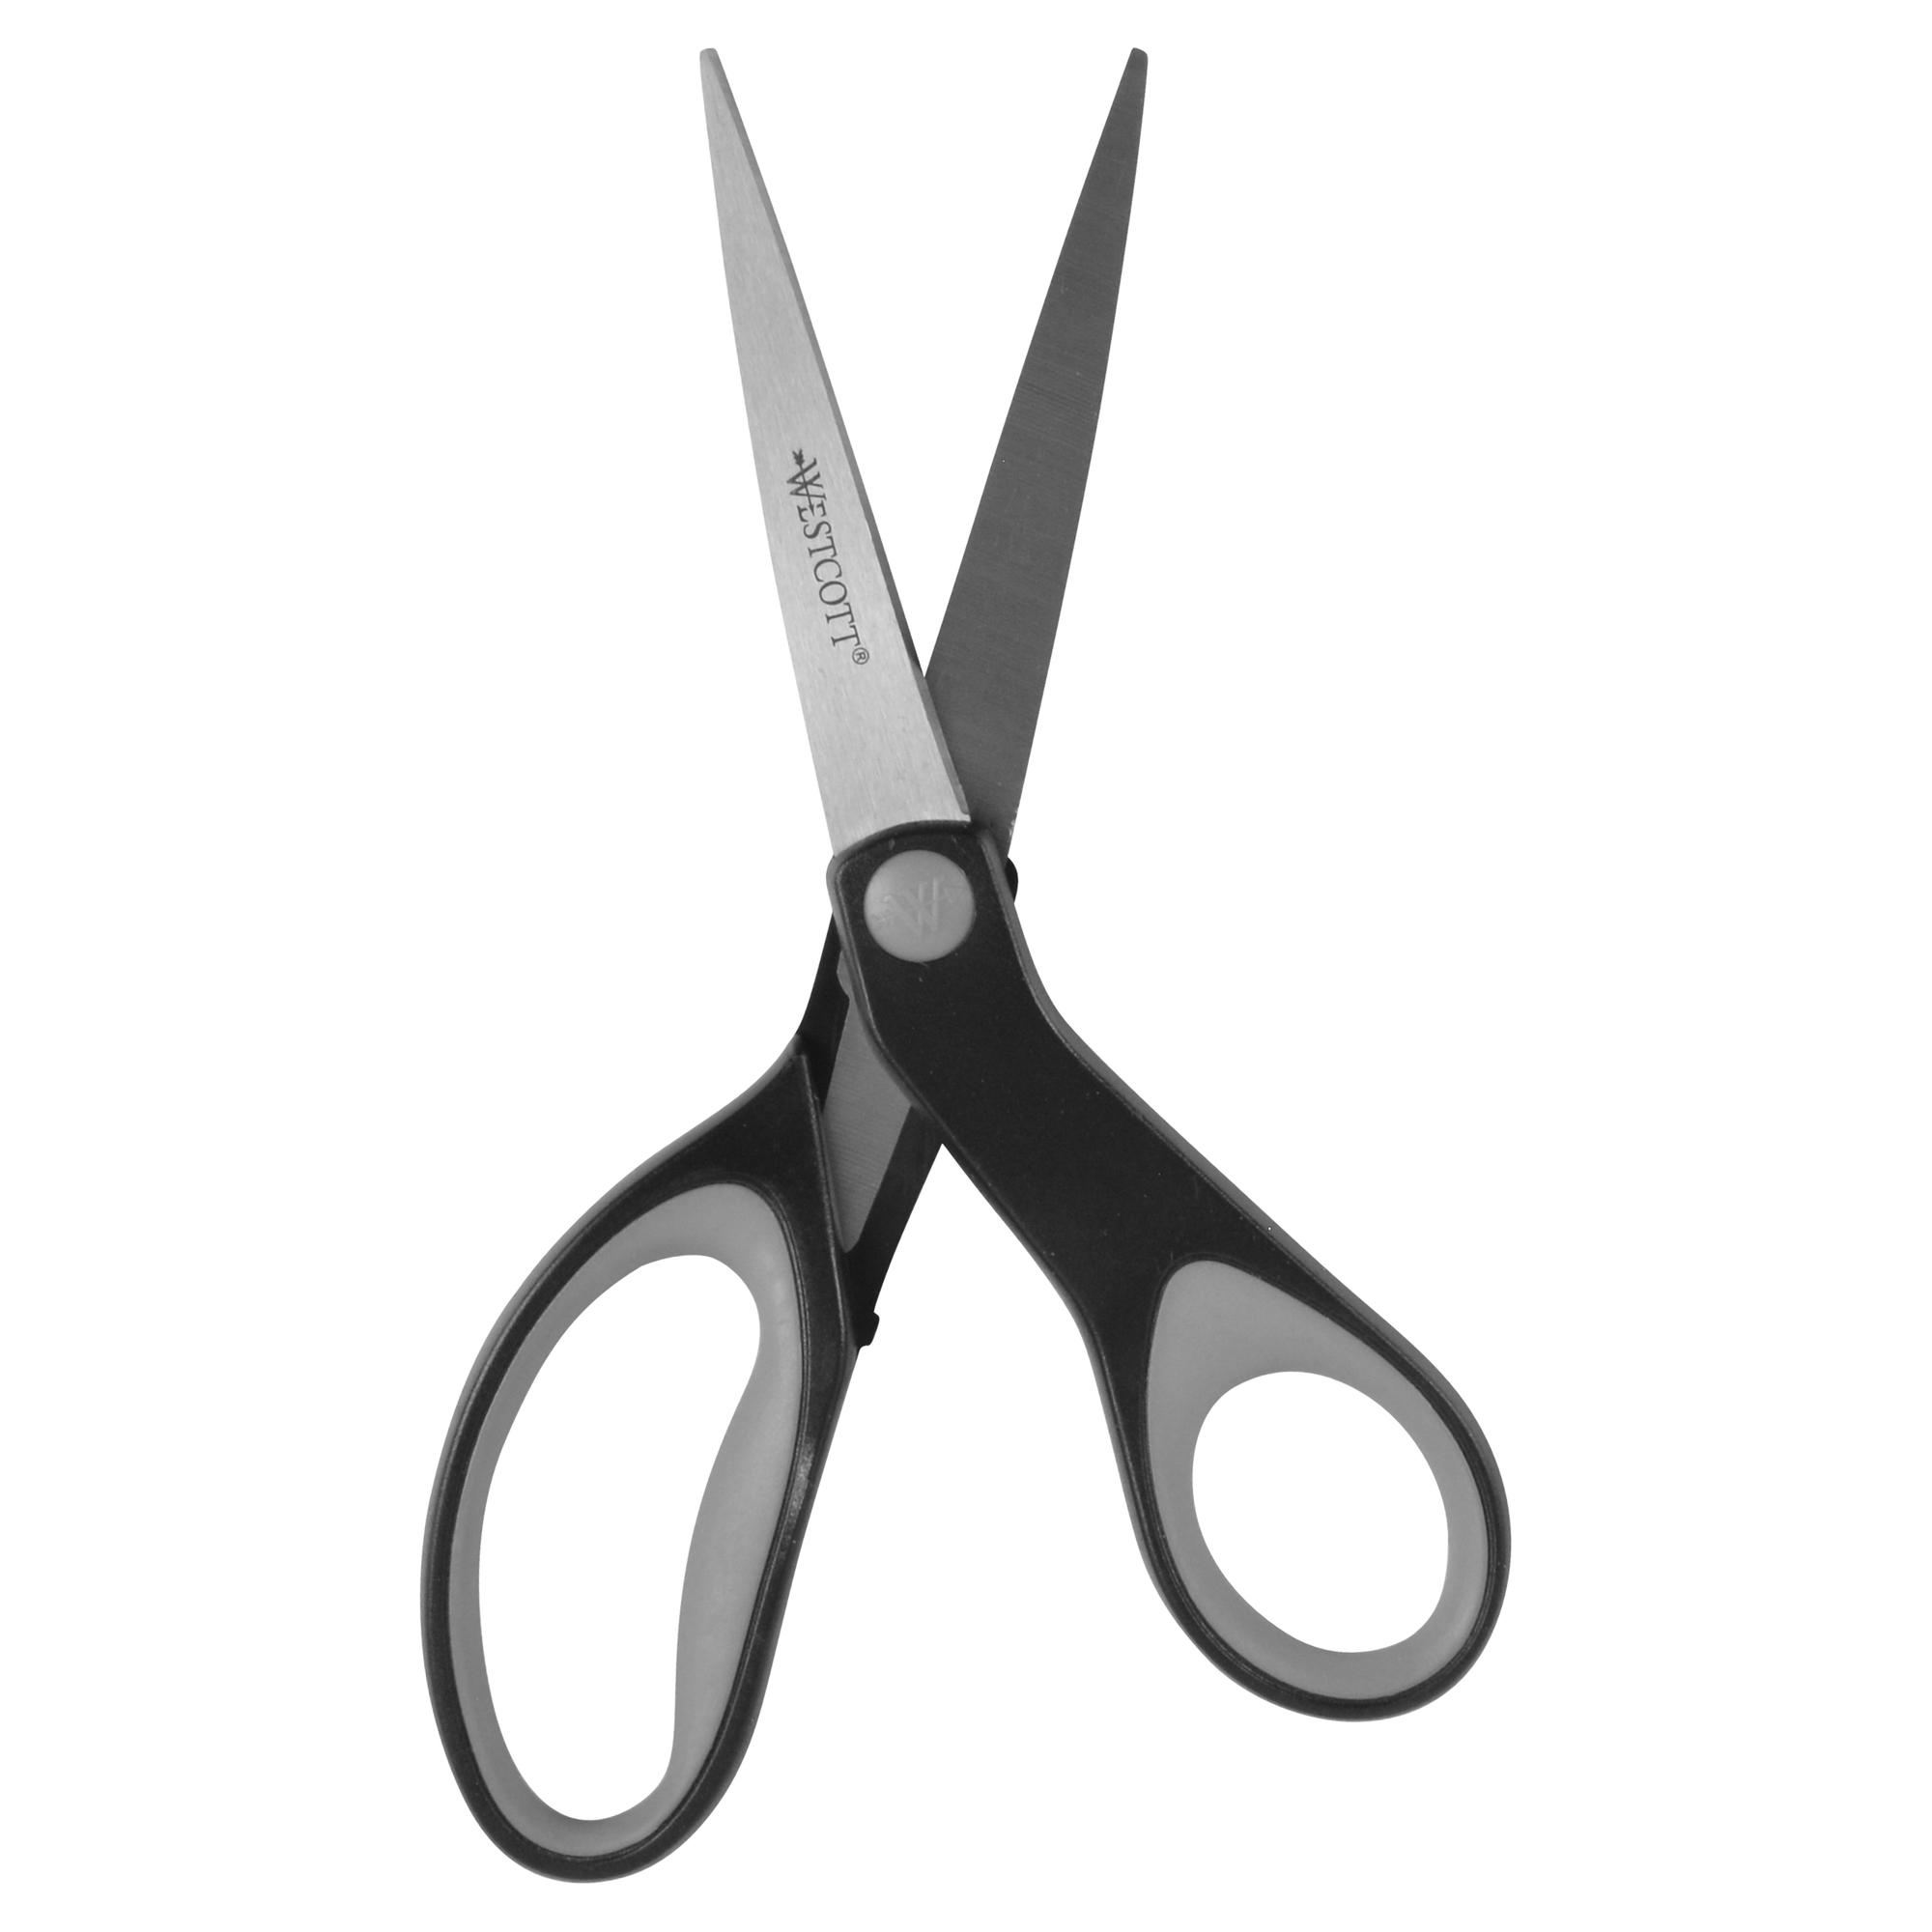 Westcott 8" Fun & Fashion Scissor (Gray and Black) - image 2 of 4